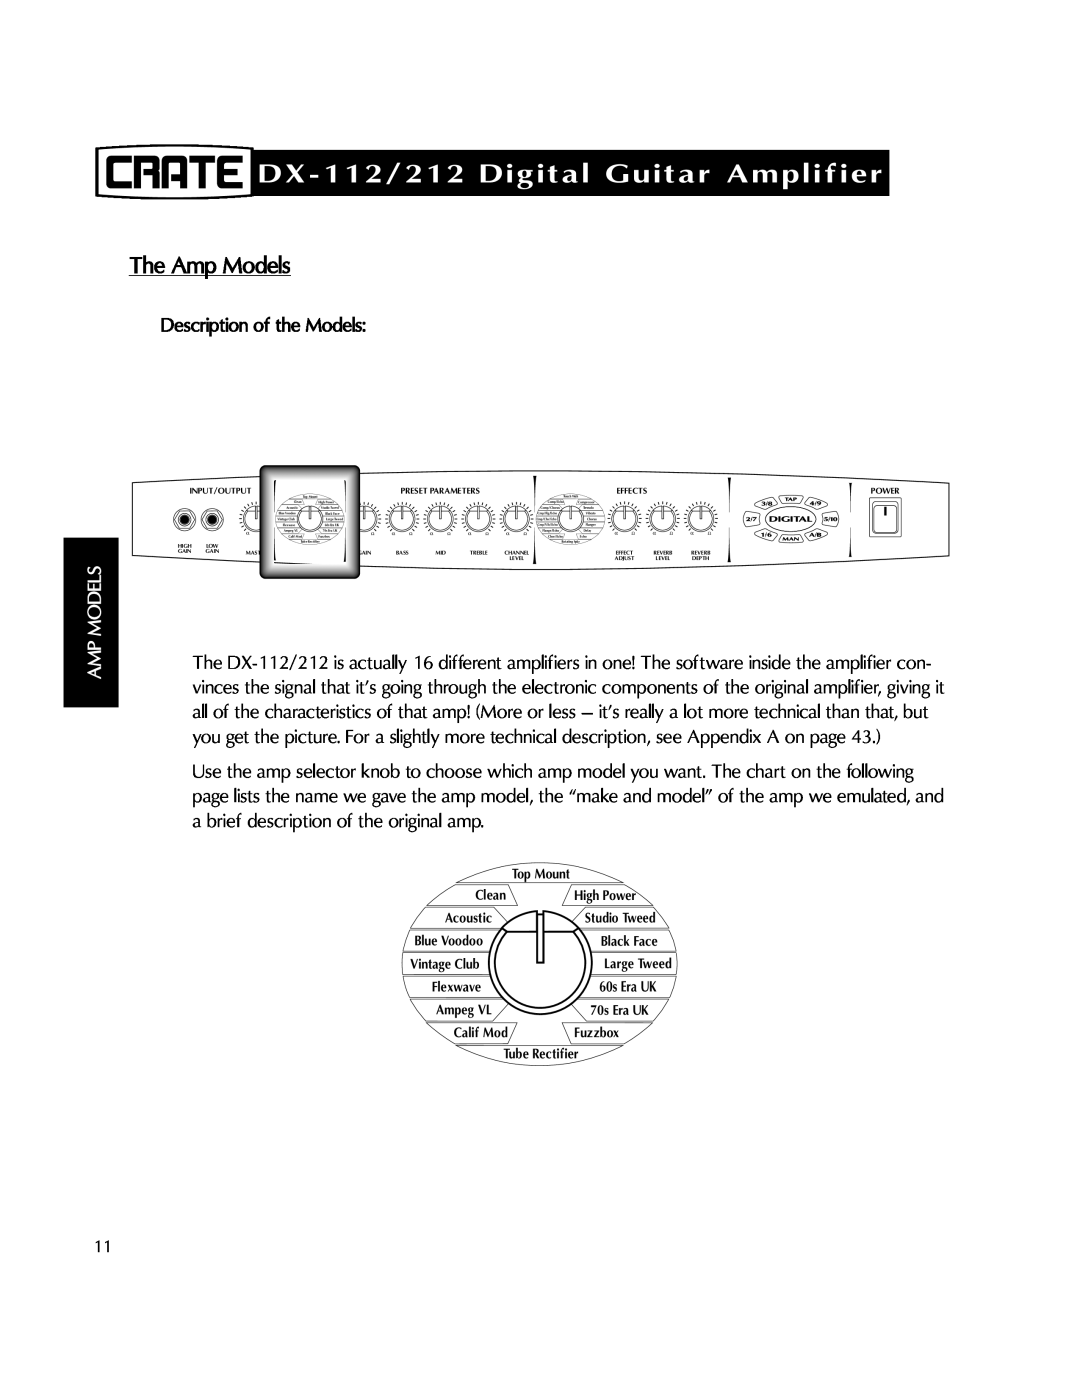 Crate Amplifiers DX-212 manual The Amp Models, DX-112/212Digital Guitar Amplifier 